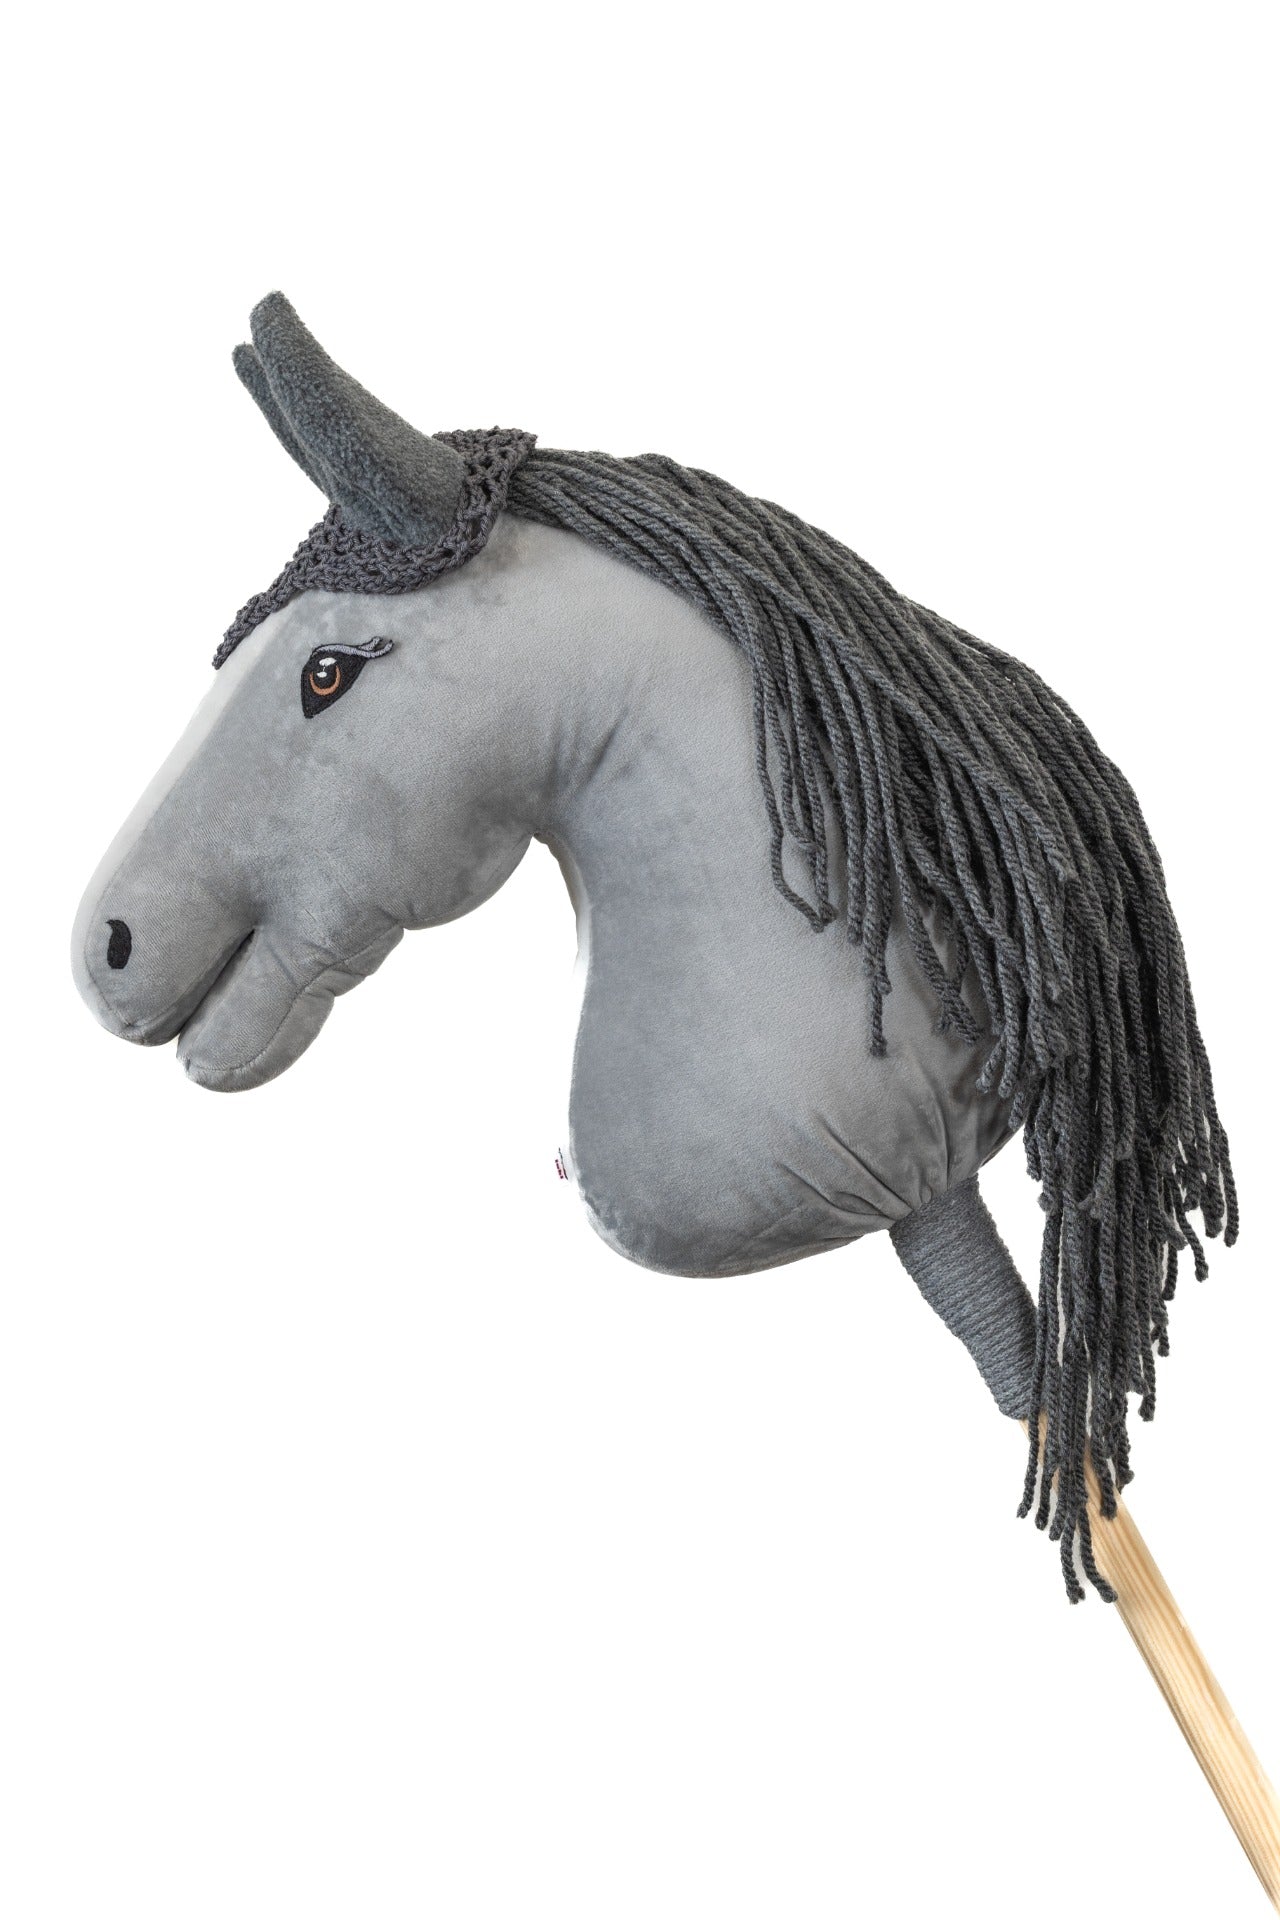 Ear net crocheted - Grey with grey ears - Adult horse